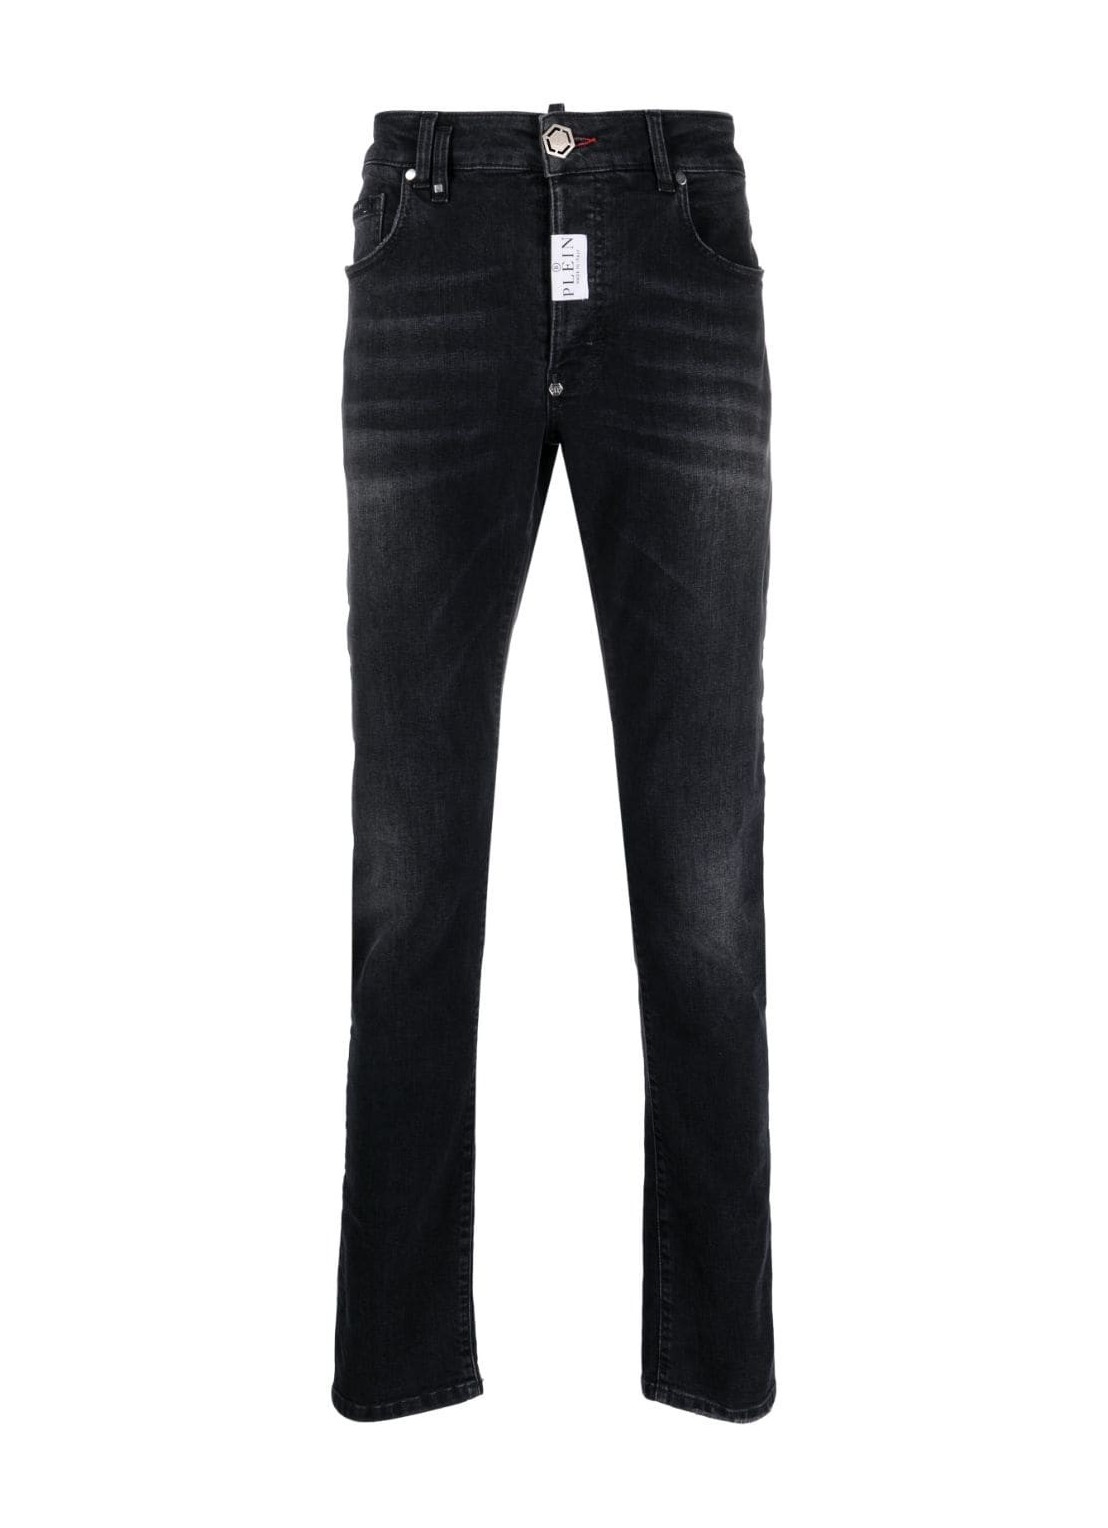 Pantalon jeans philipp plein denim man denim trousers super straight faccmdt3556pde004n 02nc talla 3